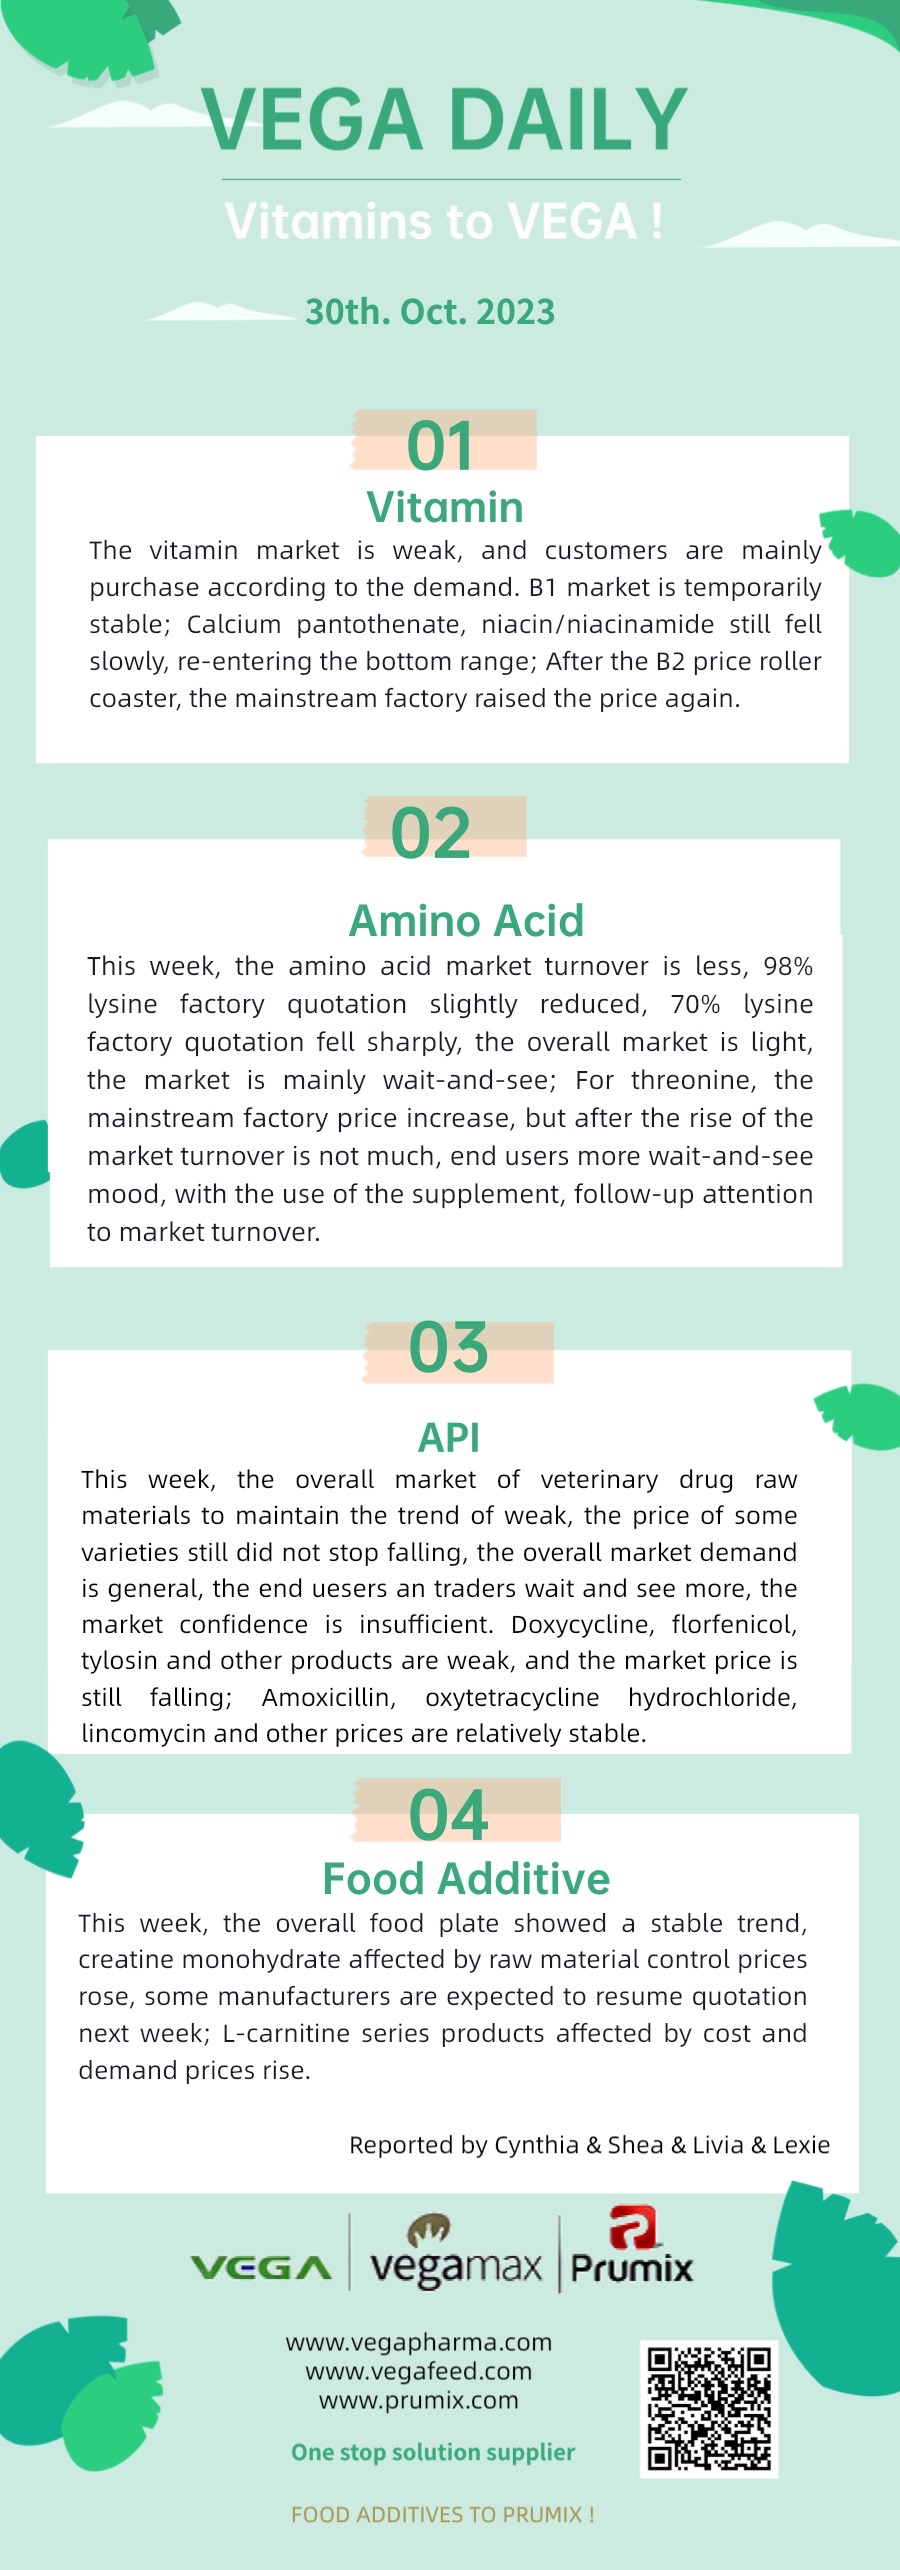 Vega Daily Dated on Oct 30th 2023 Vitamin Amino Acid API Food Additives.jpg